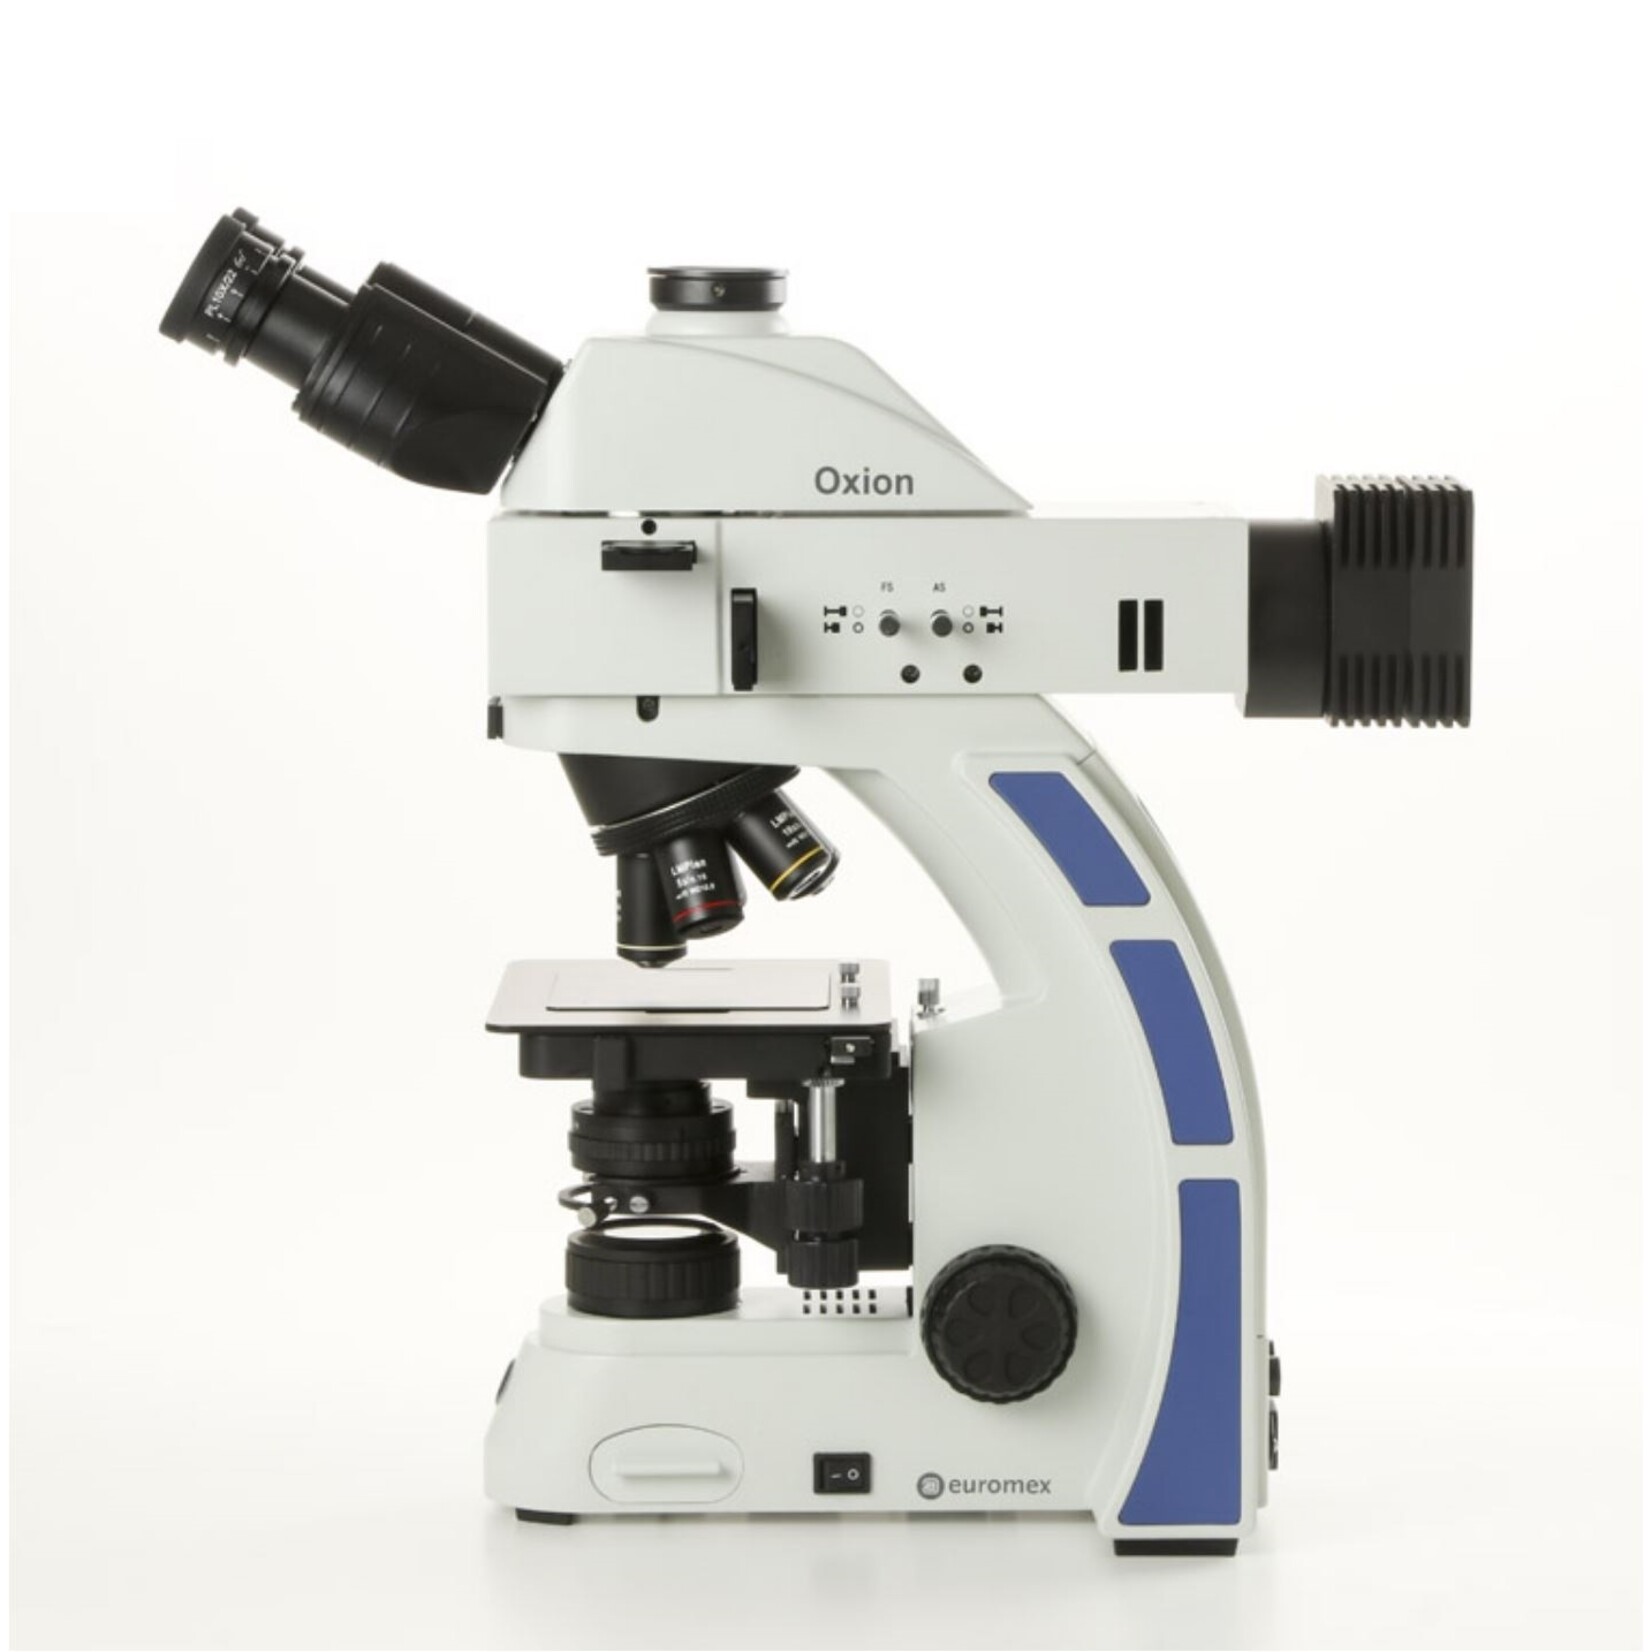 Microscópio industrial Oxion para micrografias